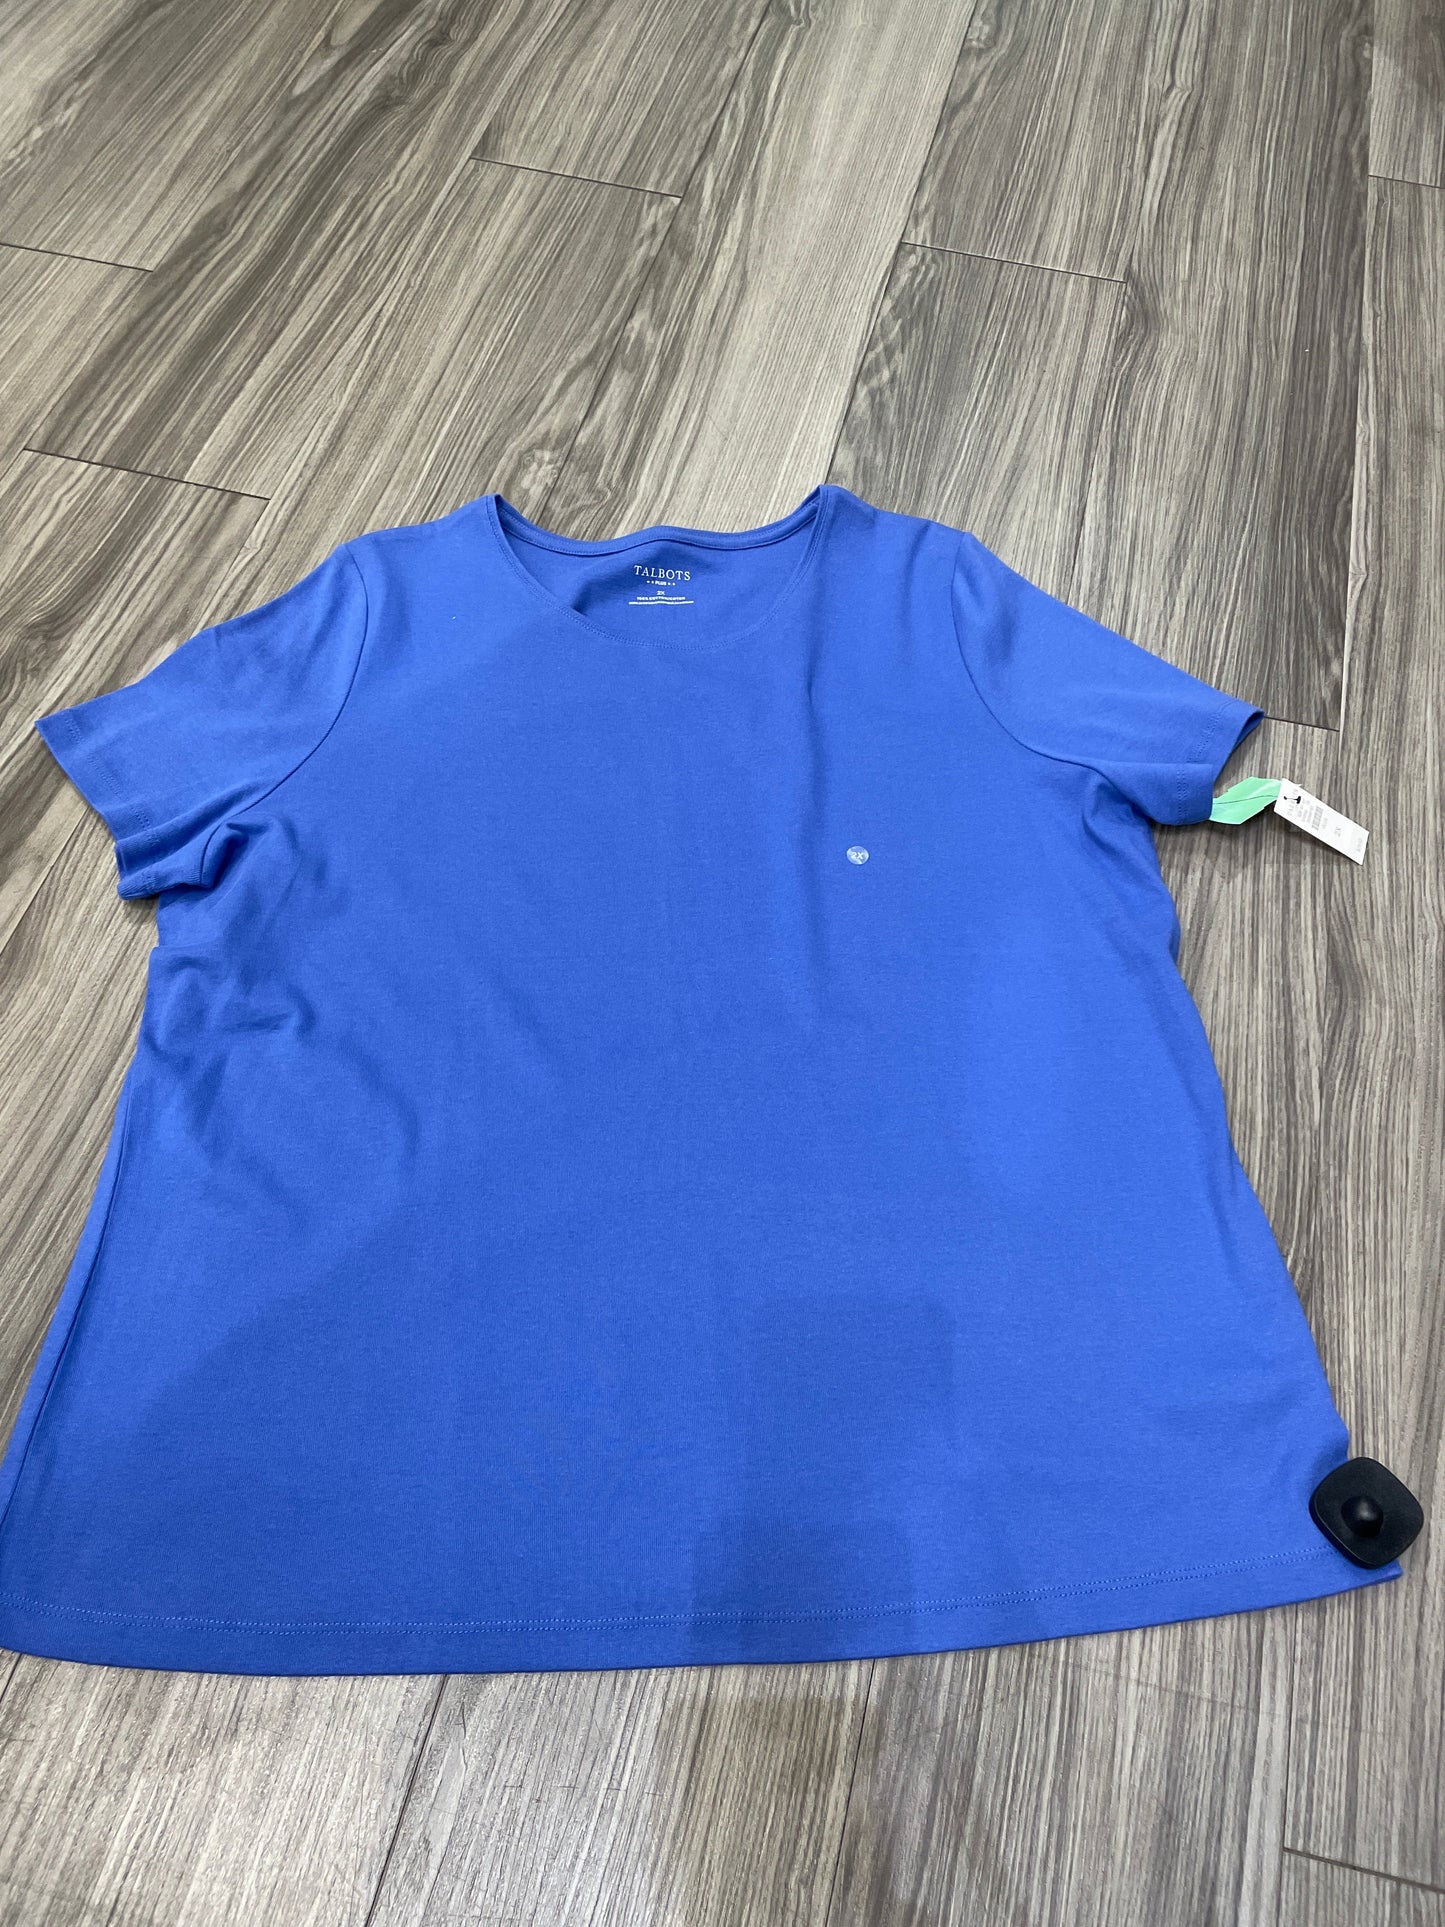 Blue Top Short Sleeve Talbots, Size 2x